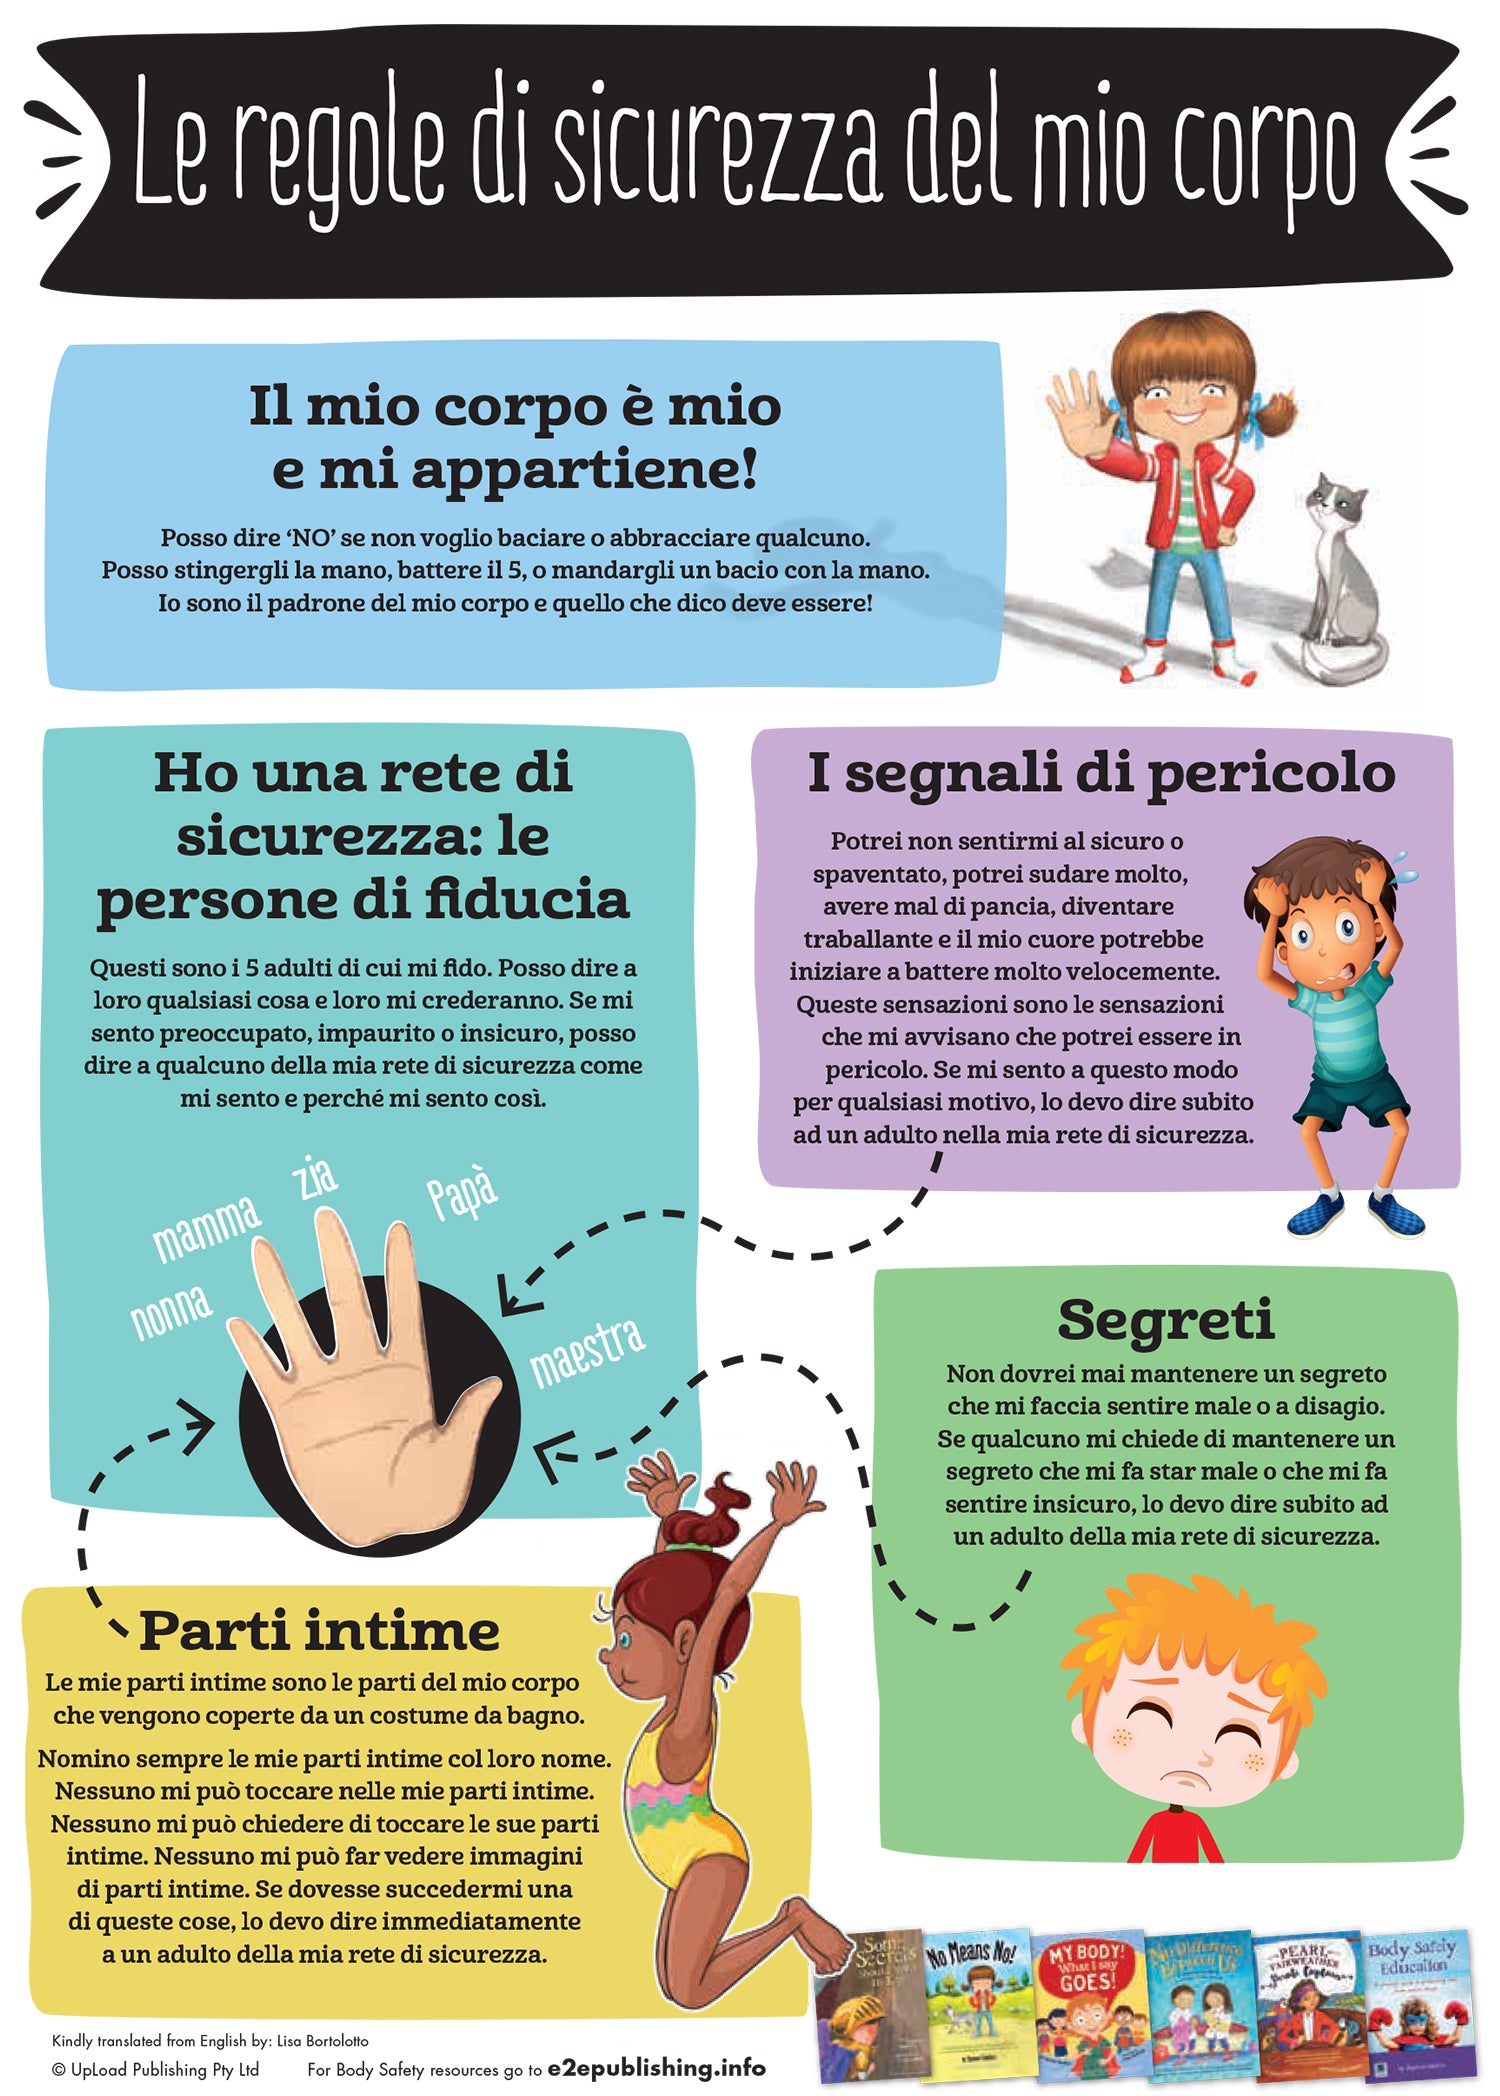 Body Safety Rules poster for children, written in Italian.